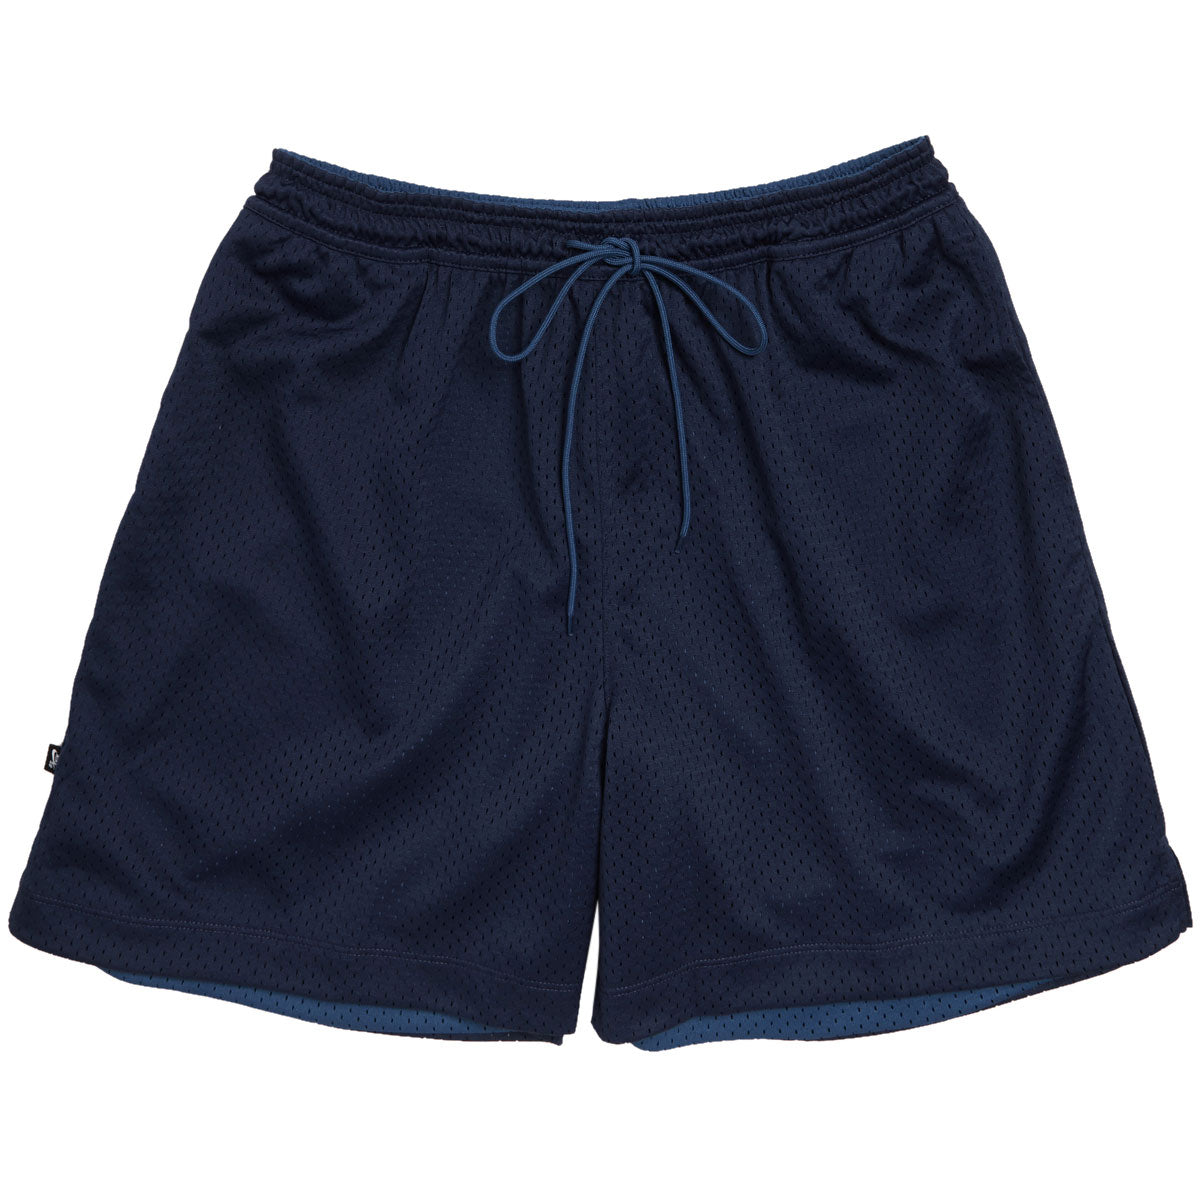 Nike SB Basketball Skate Shorts - Midnight Navy/Court Blue image 1